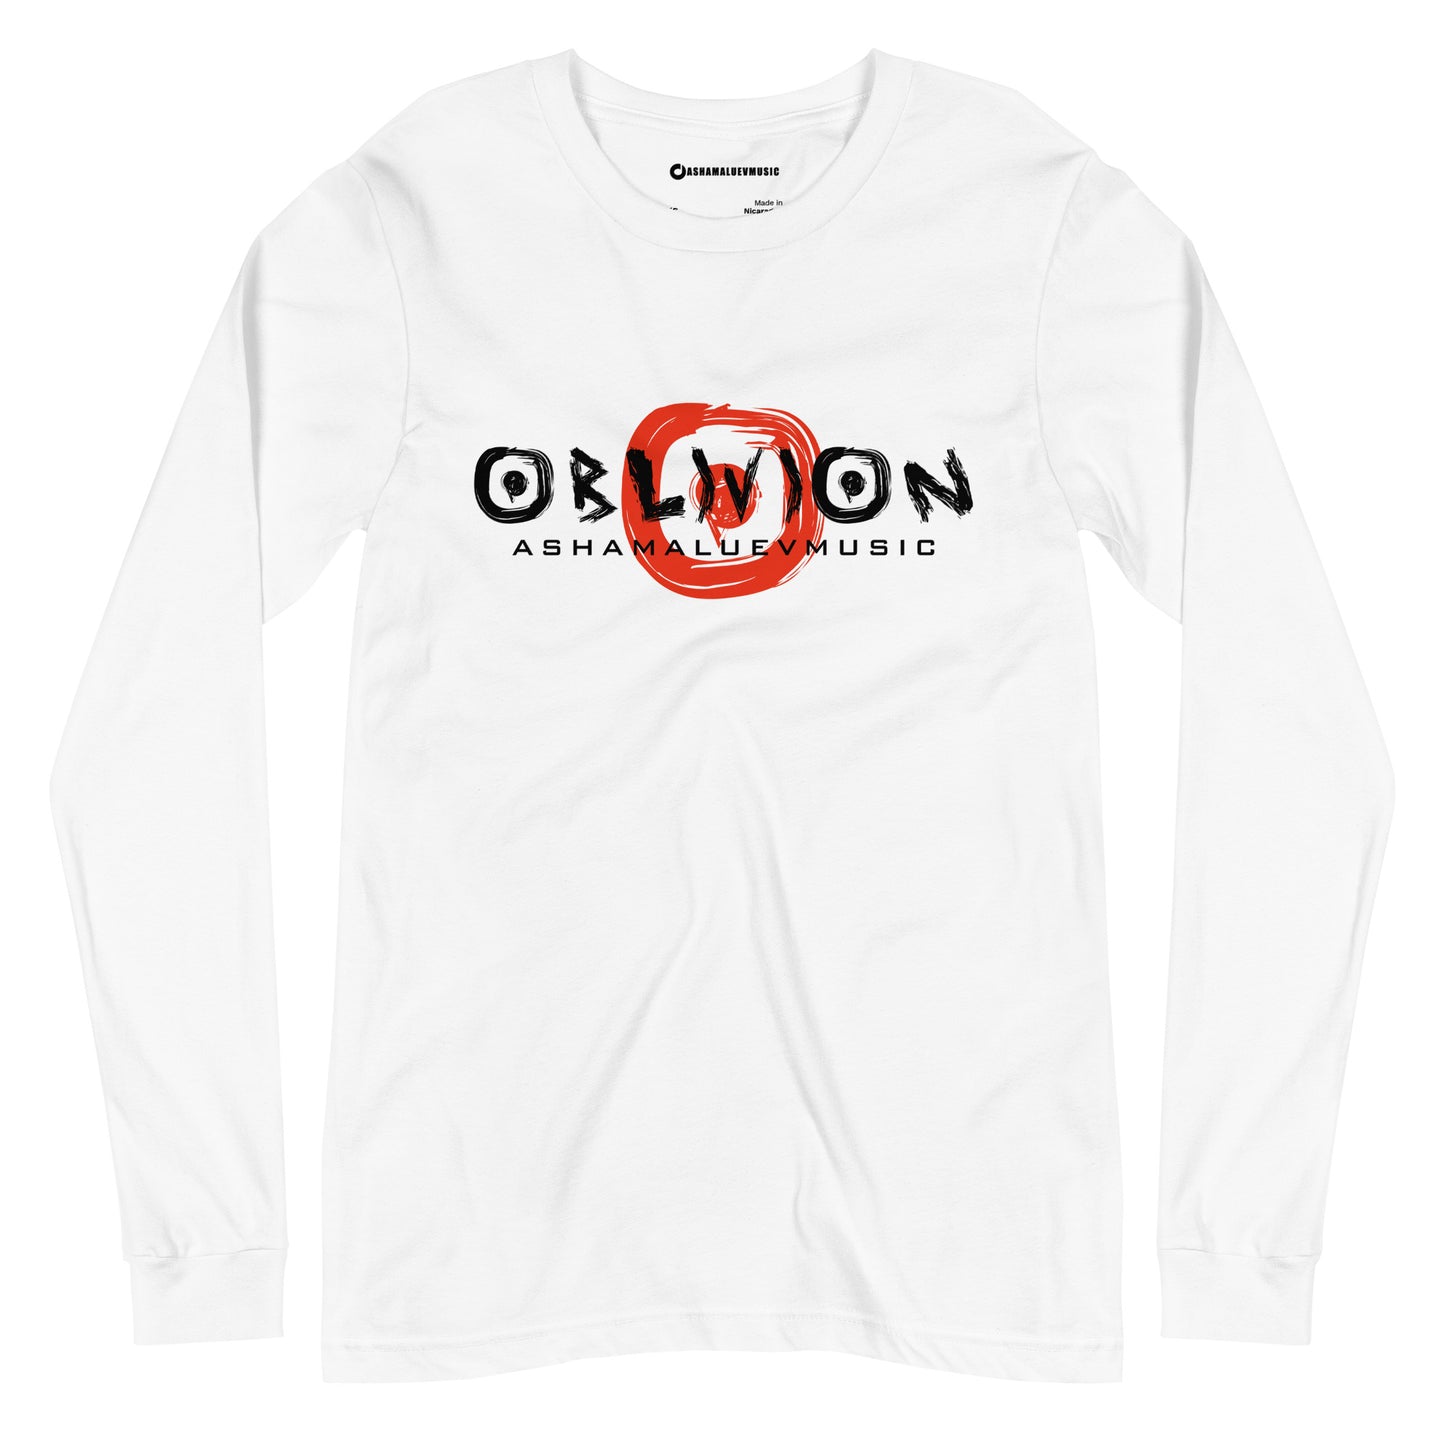 Long Sleeve T-Shirt 'Oblivion' III